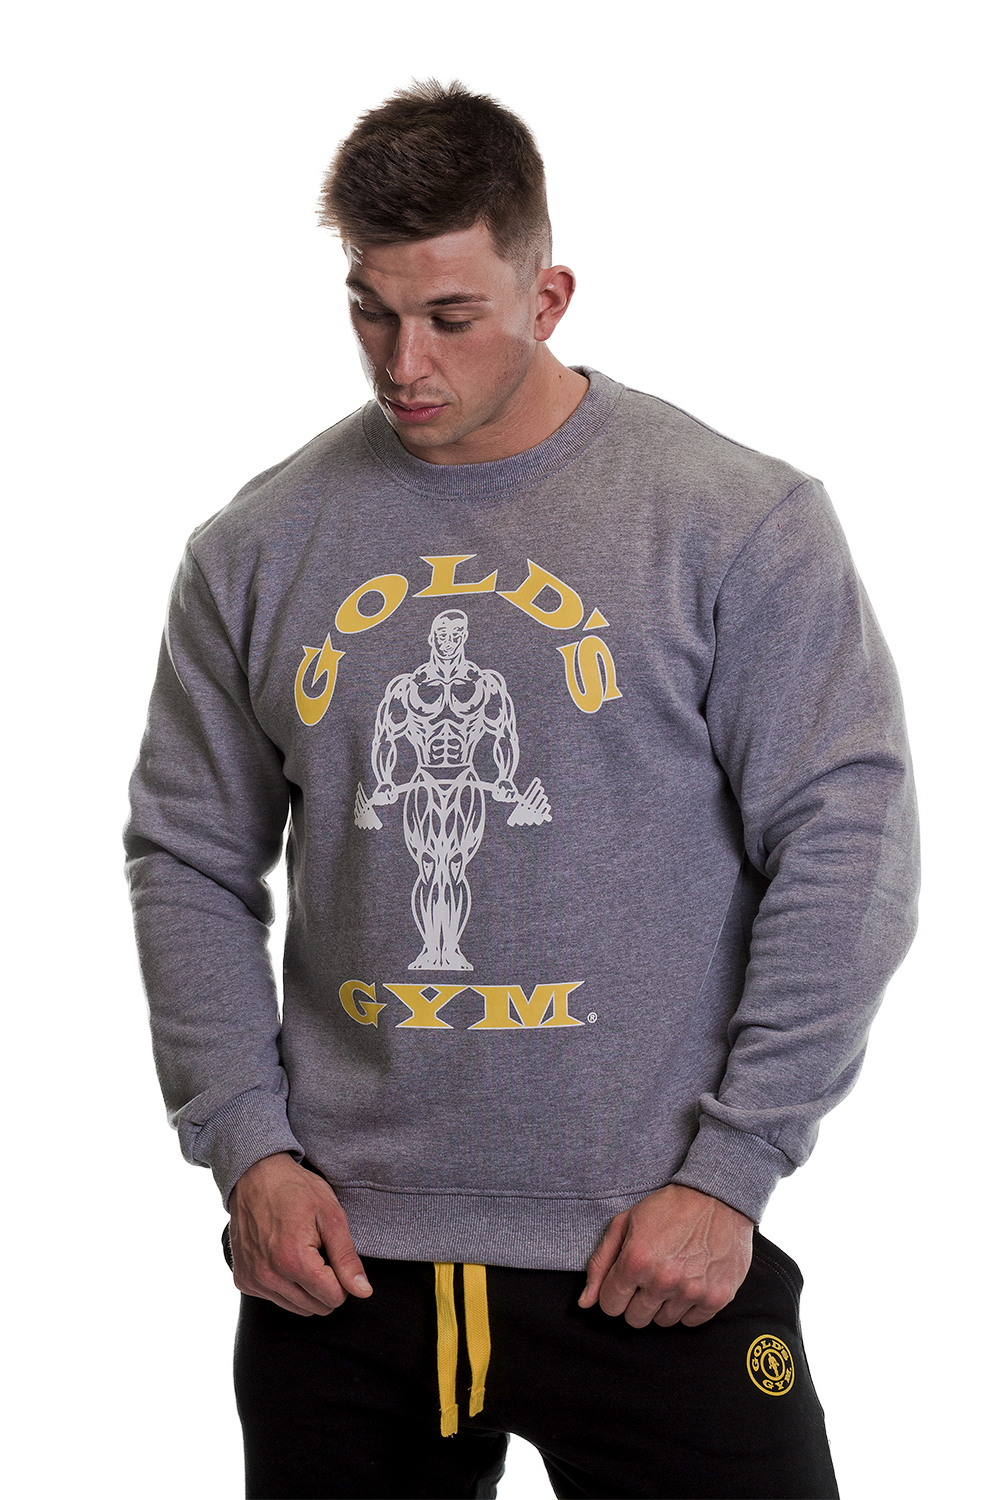 Money Clothing Mens Crew Neck Sweatshirt Graphic Sweater Jumper Top Gym Colours 